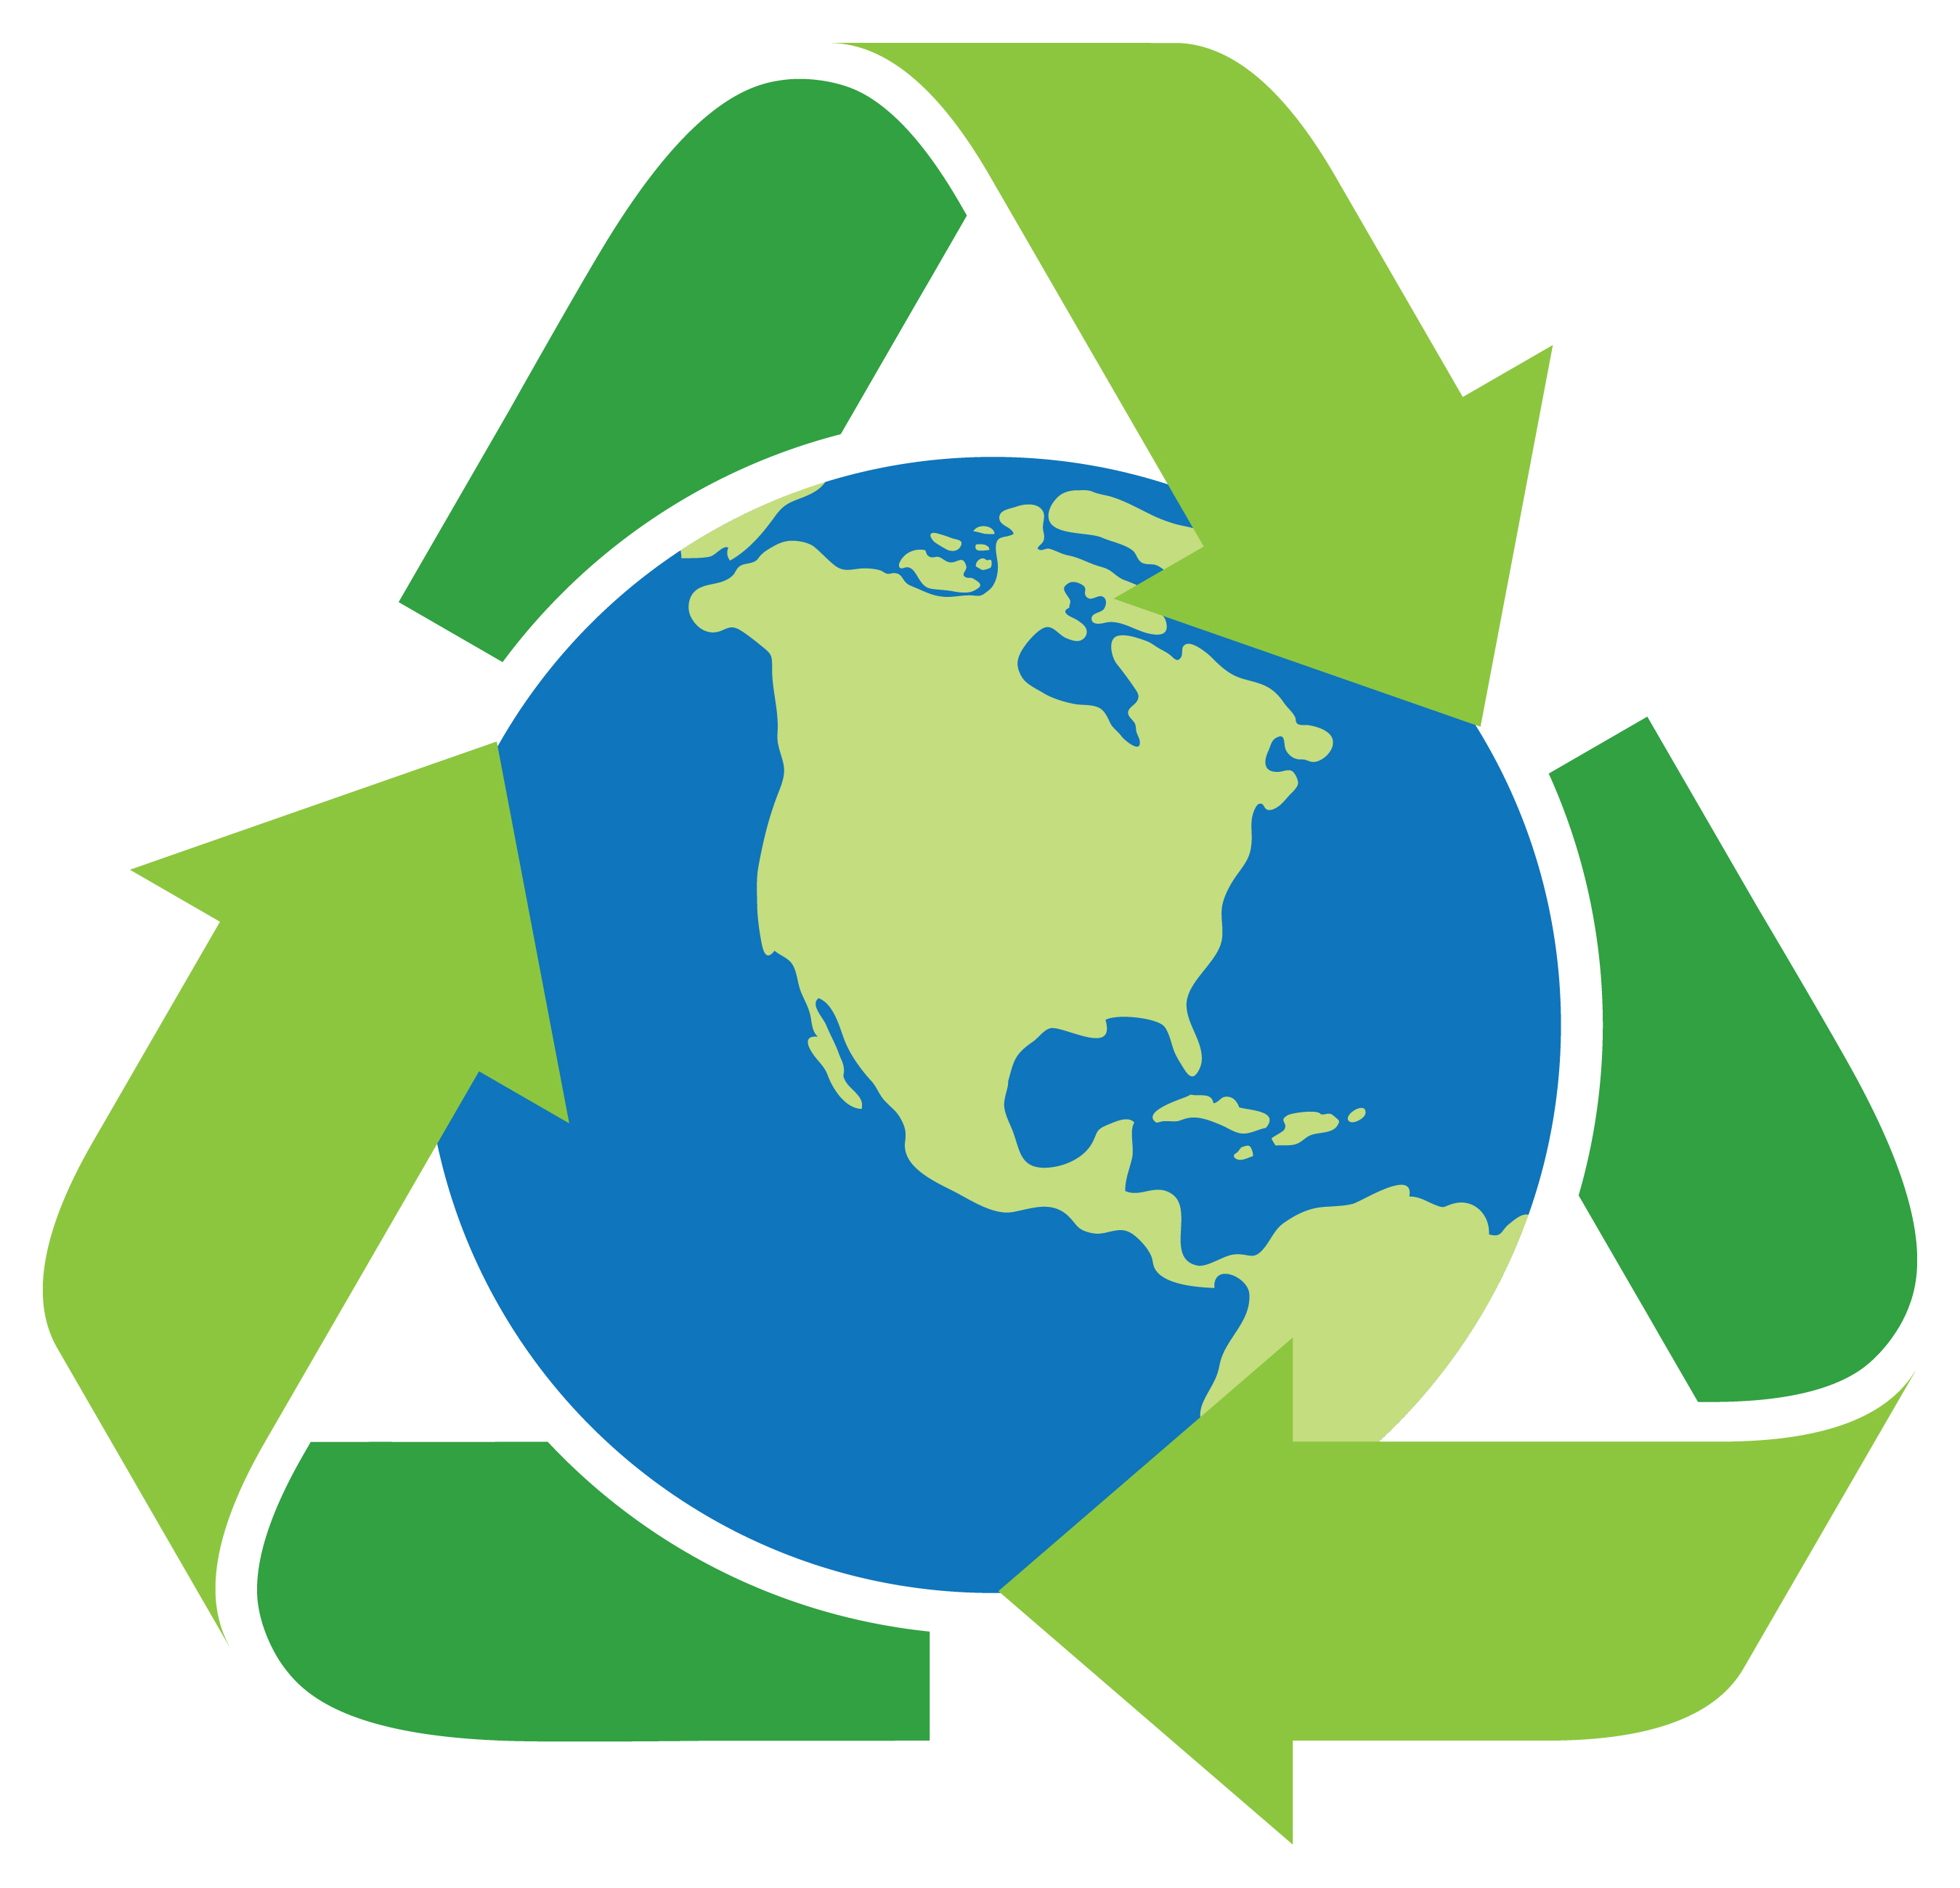 UltraBaseSystemsÂ® is Environmentally Responsible